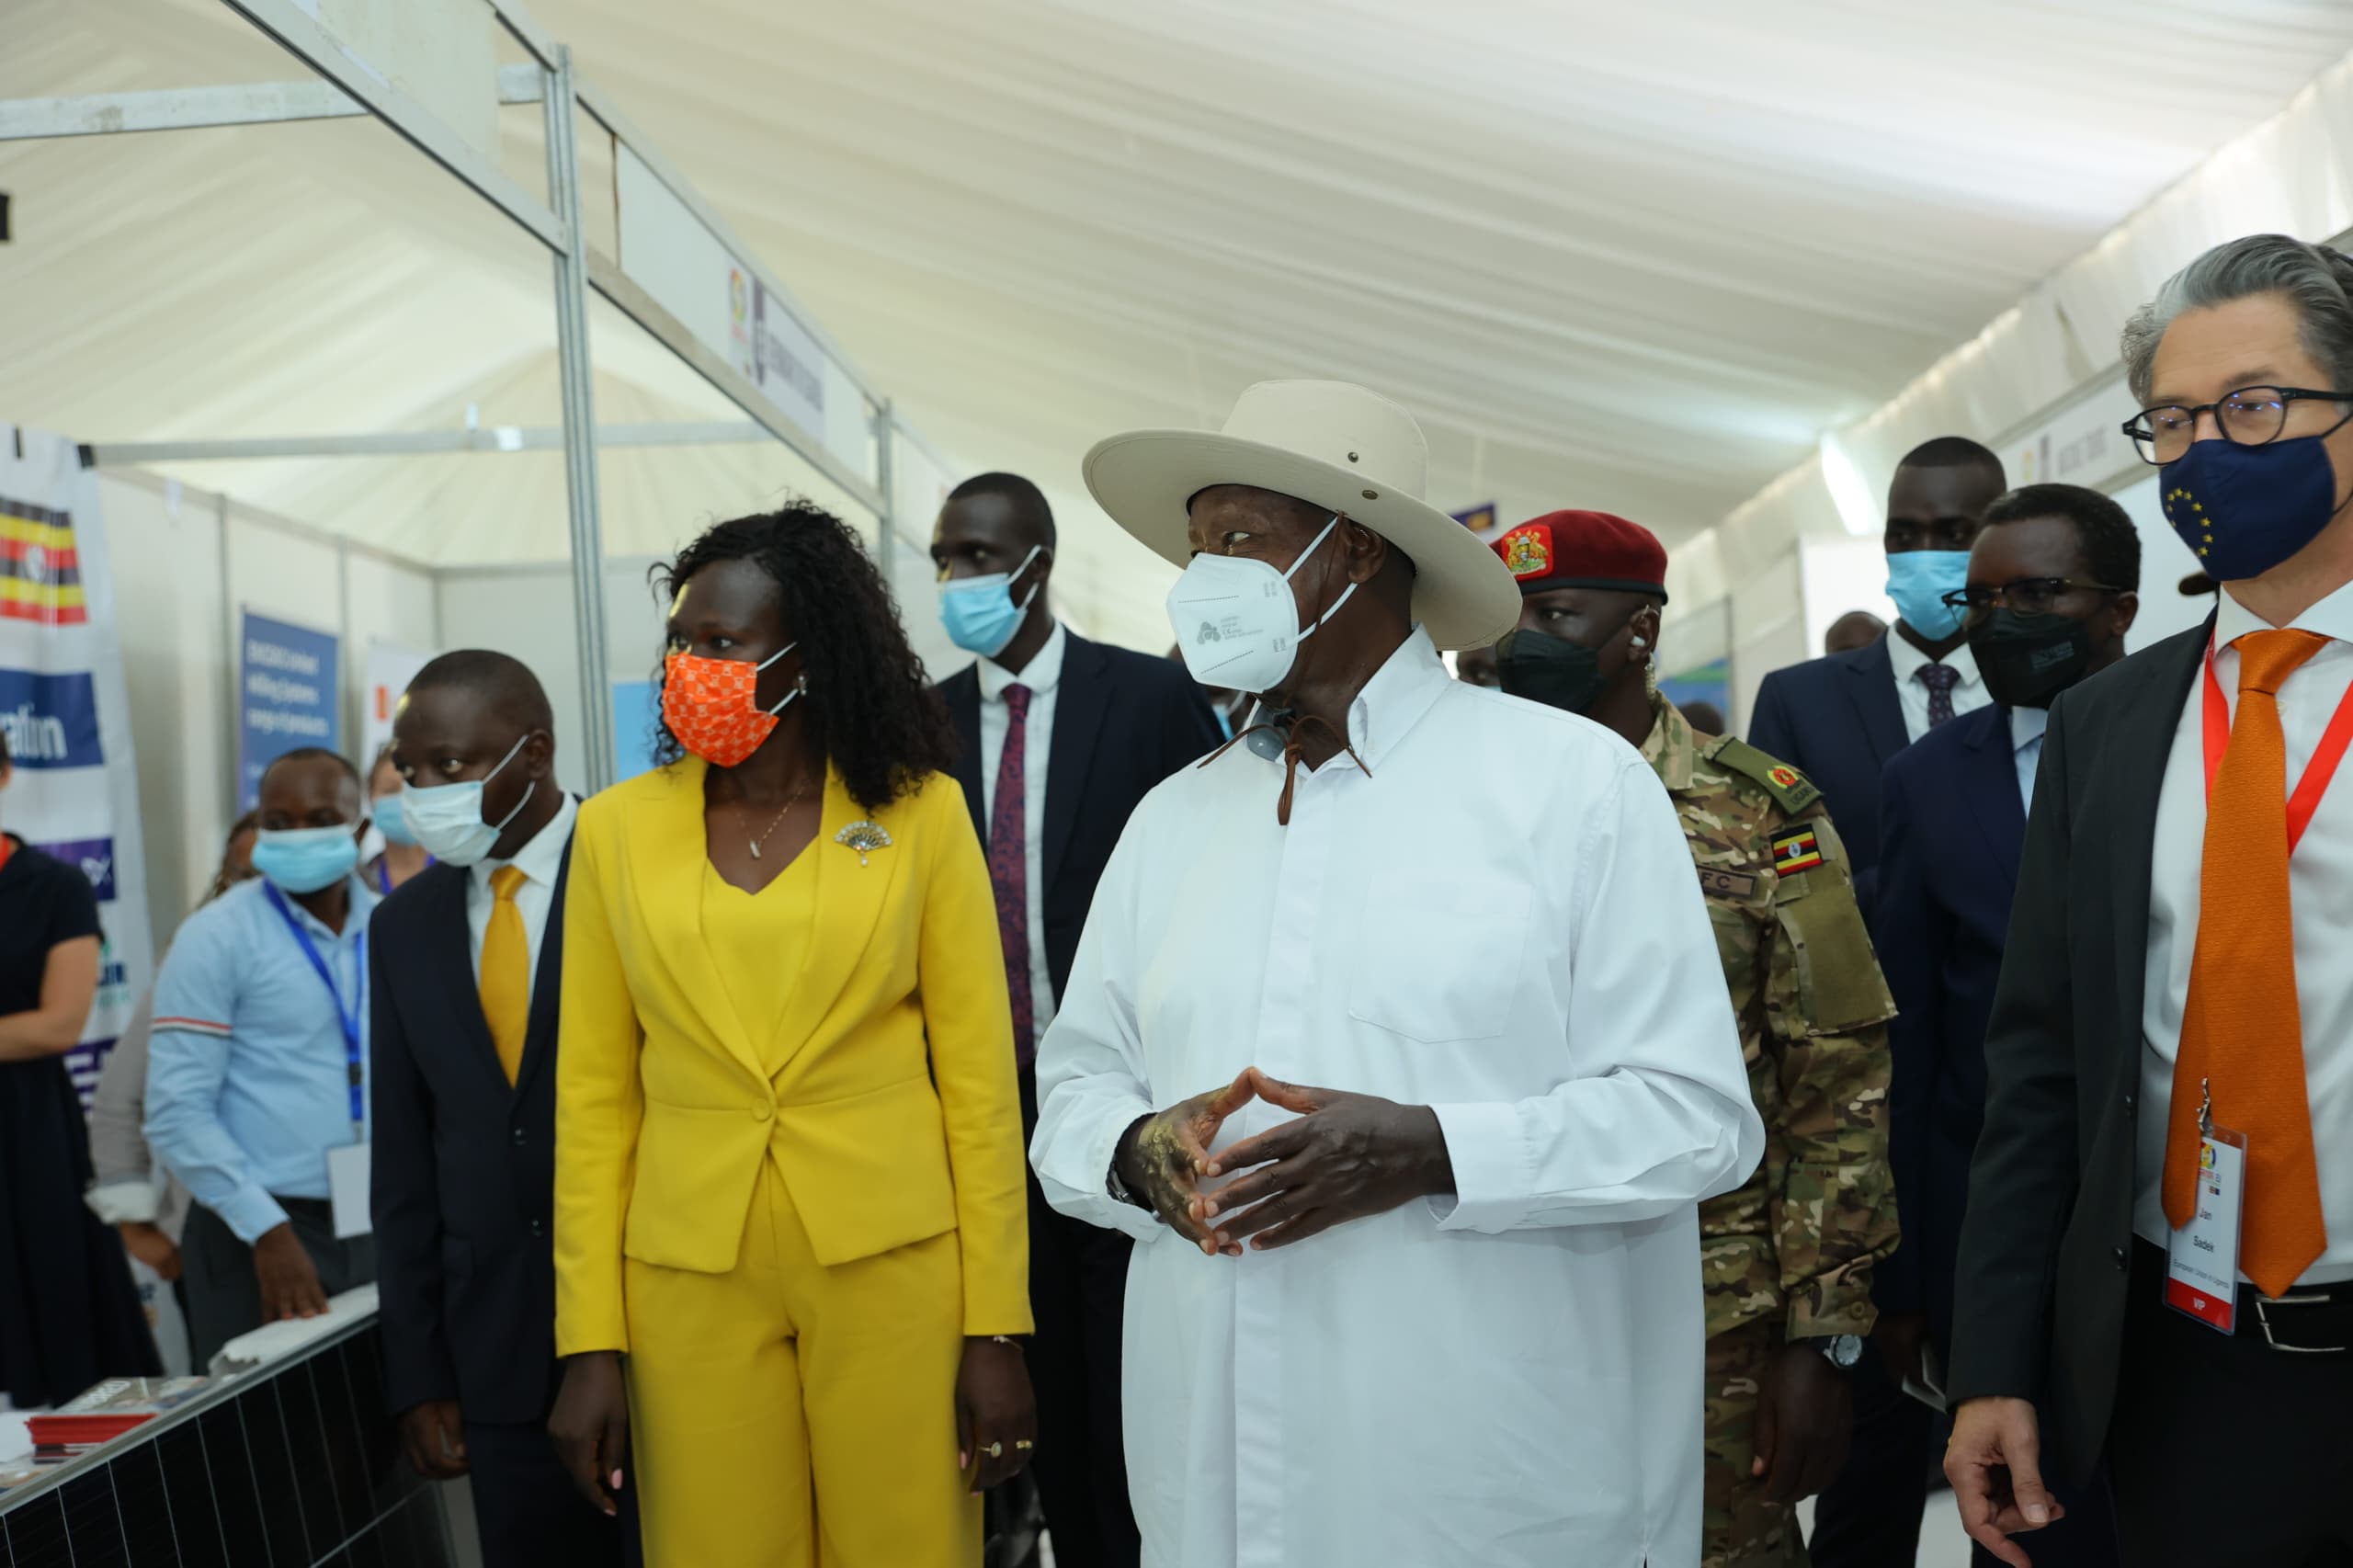 Don’t mix business with politics, Museveni tells Europeans